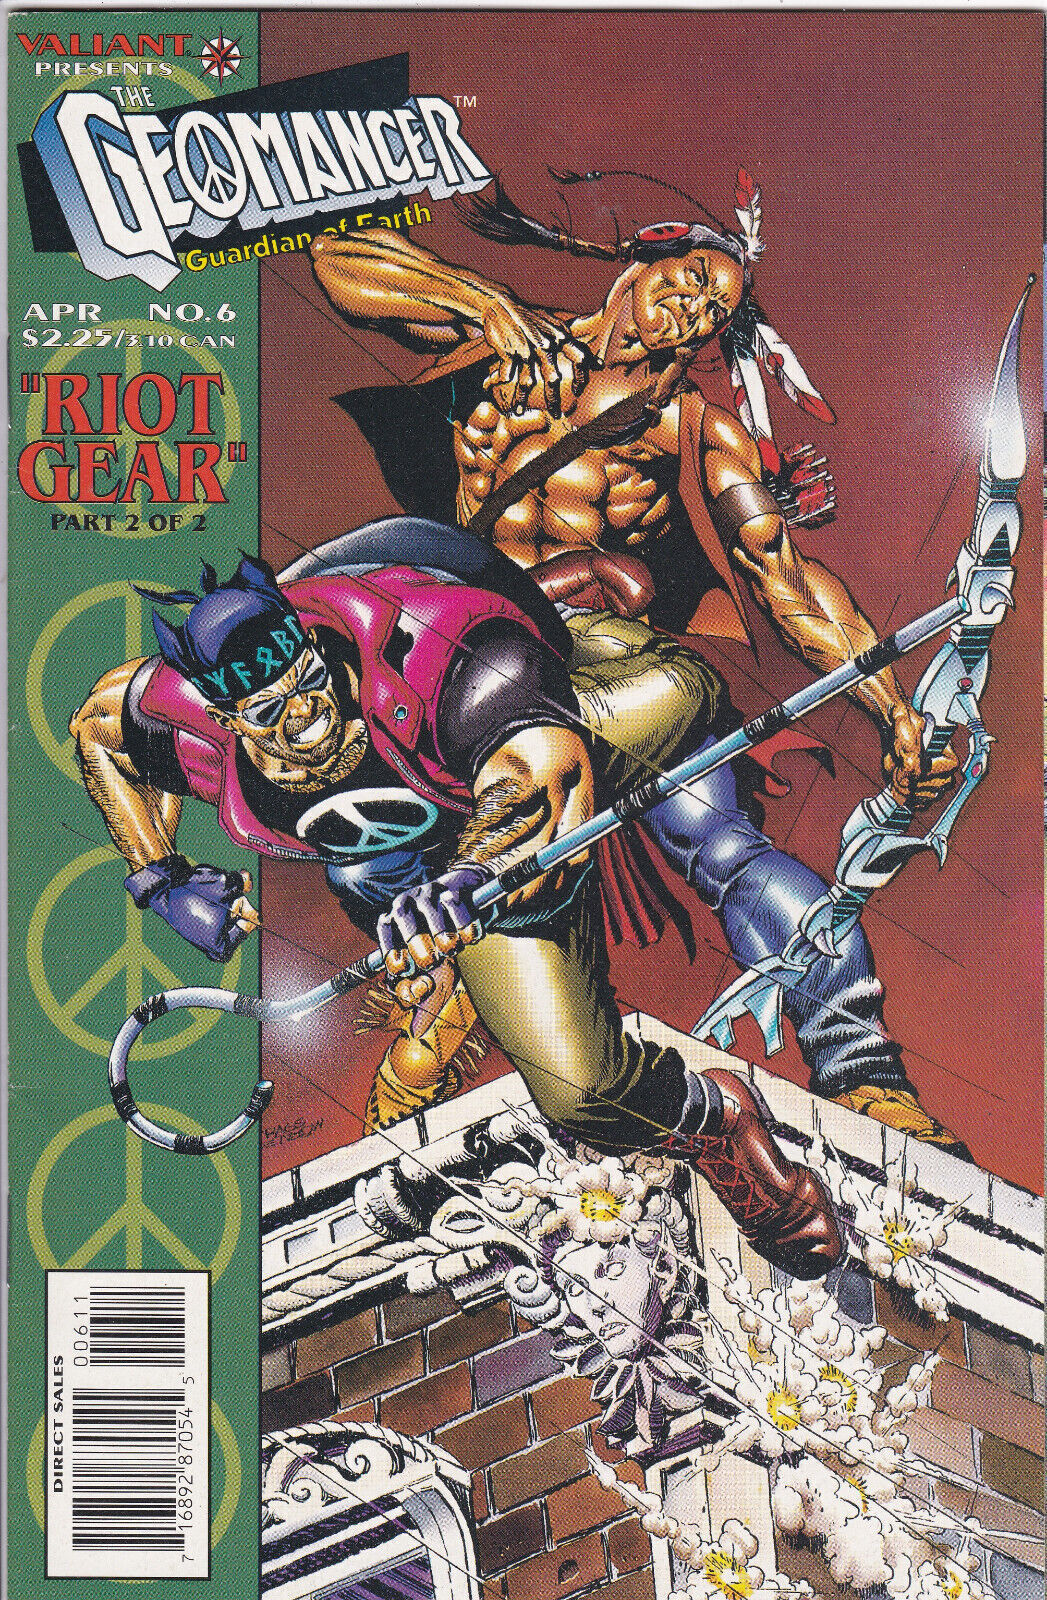 Geomancer #6, (1994-1995) Valiant Entertainment